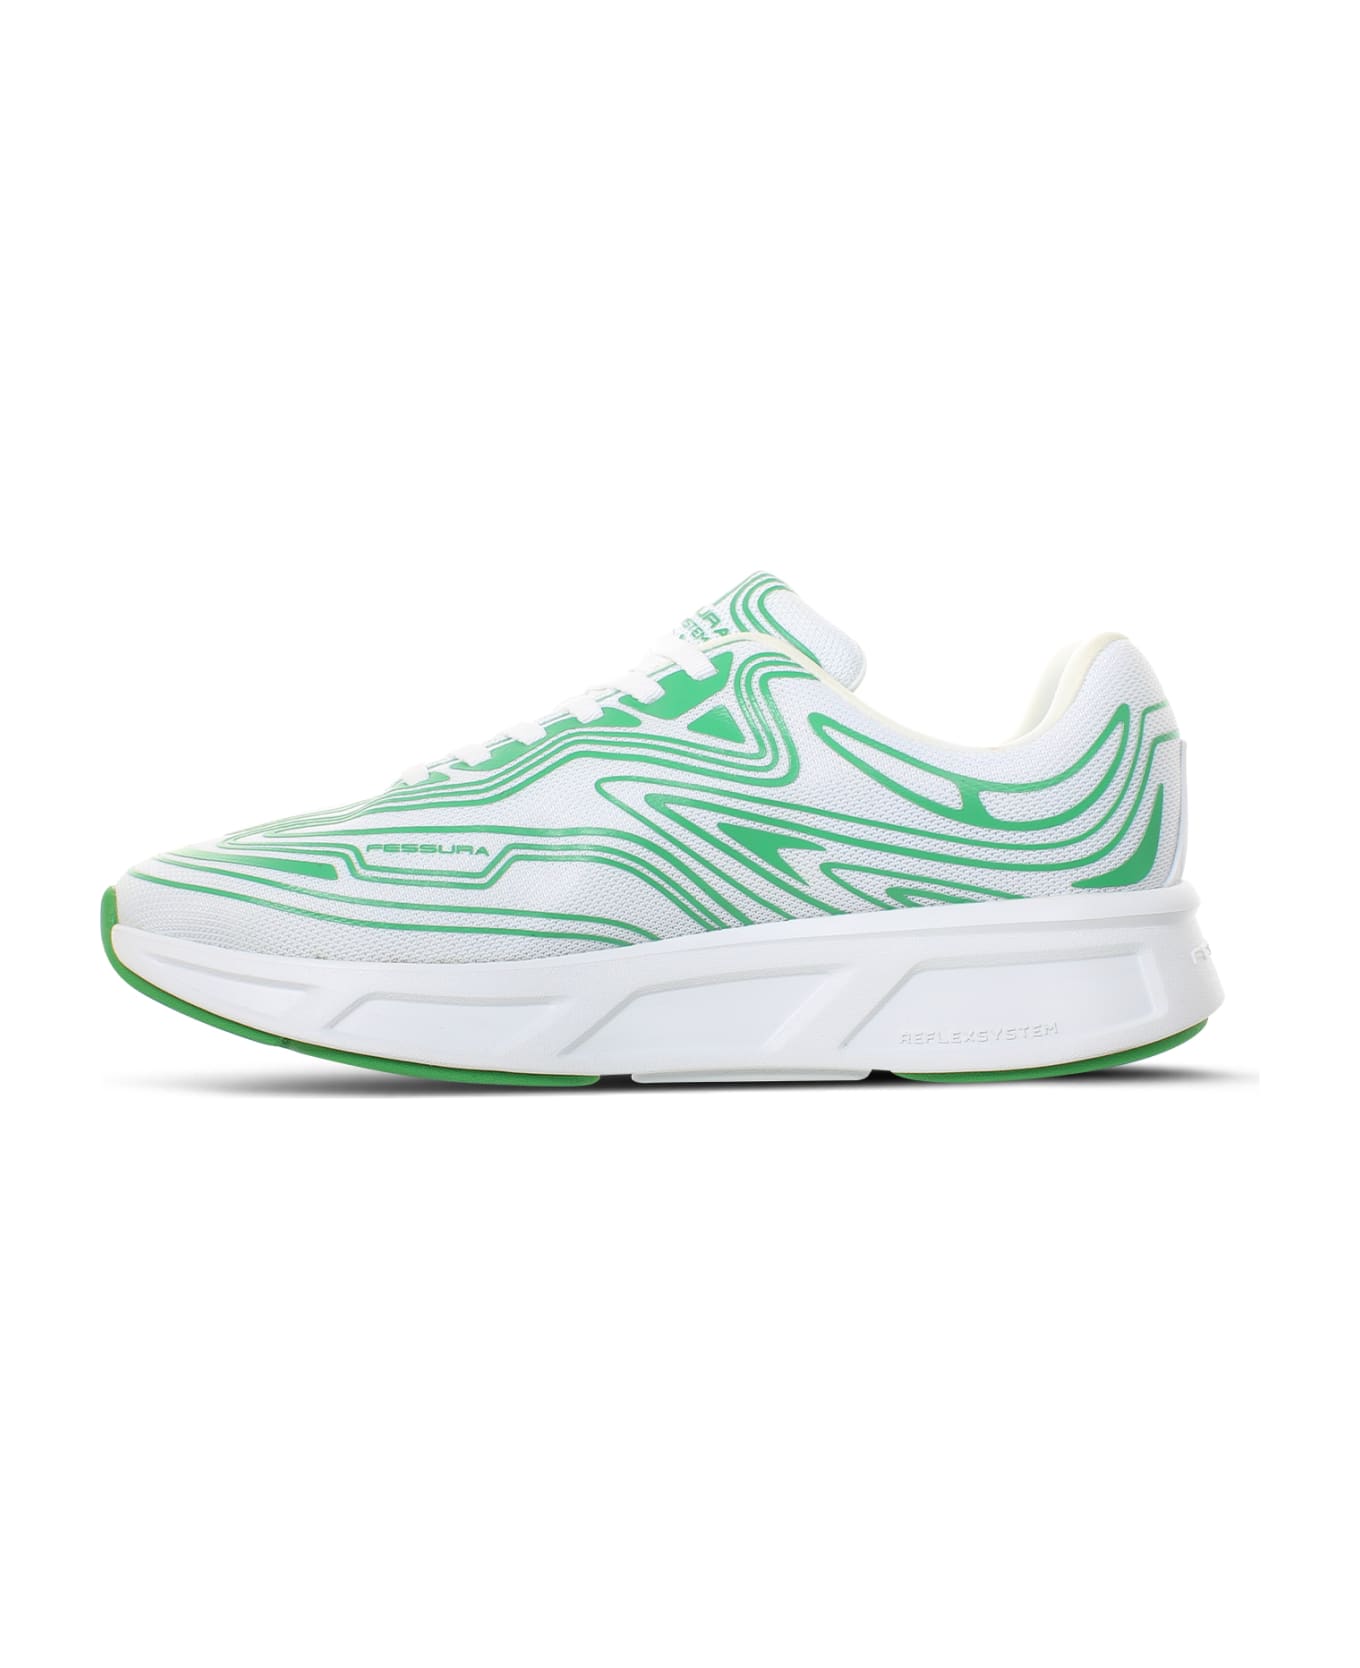 Fessura Runflex #01 - white-green